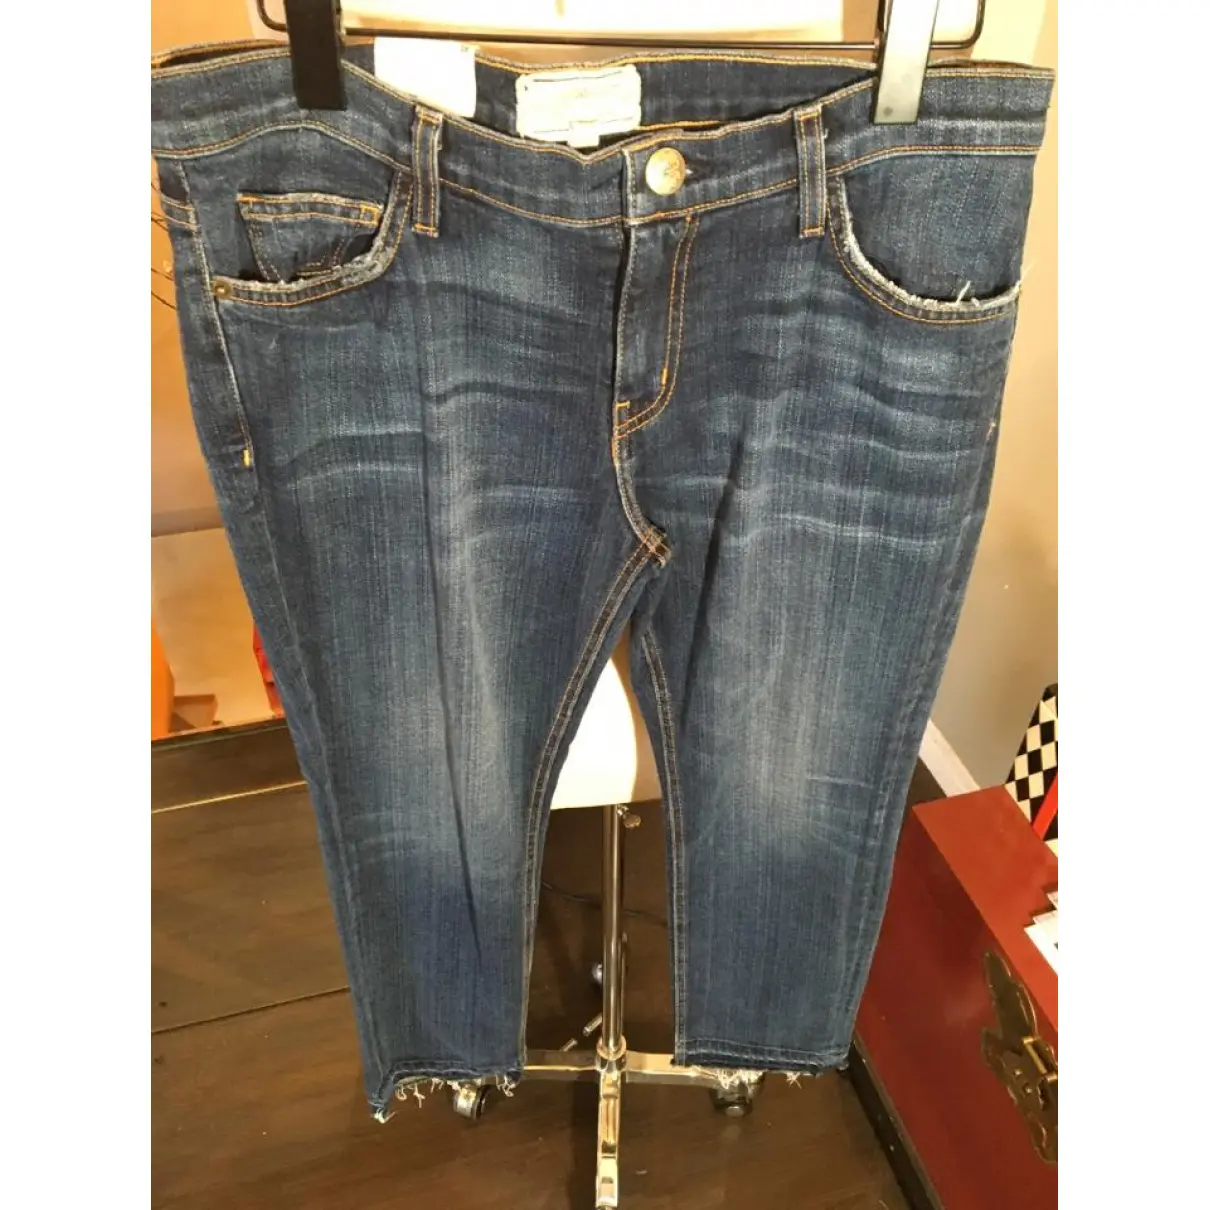 Buy Current Elliott Jeans online